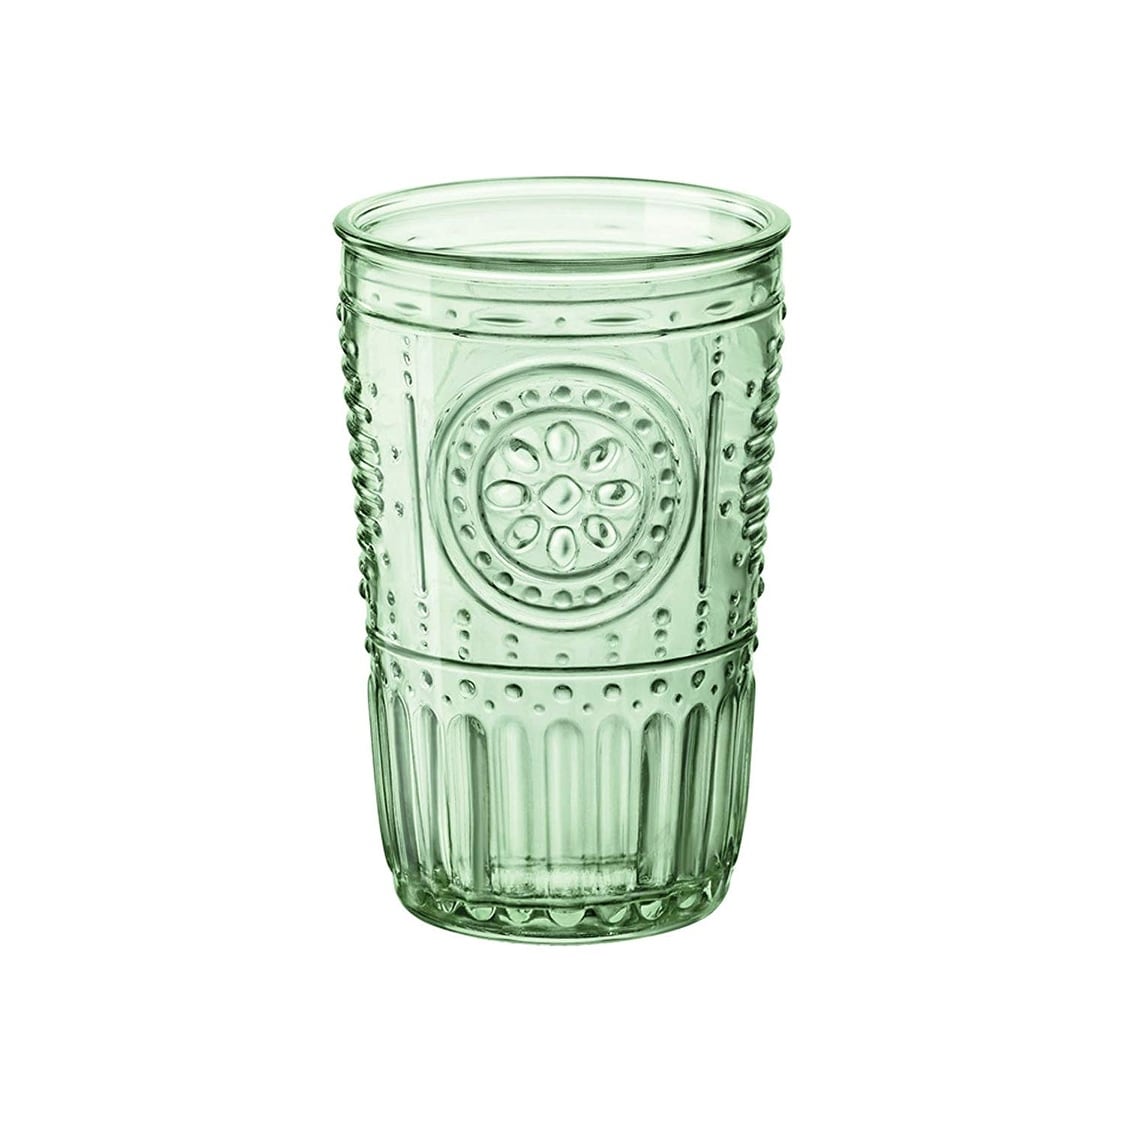 Bormioli Rocco Oriente Water Glass, Set of 6, 13.5 oz